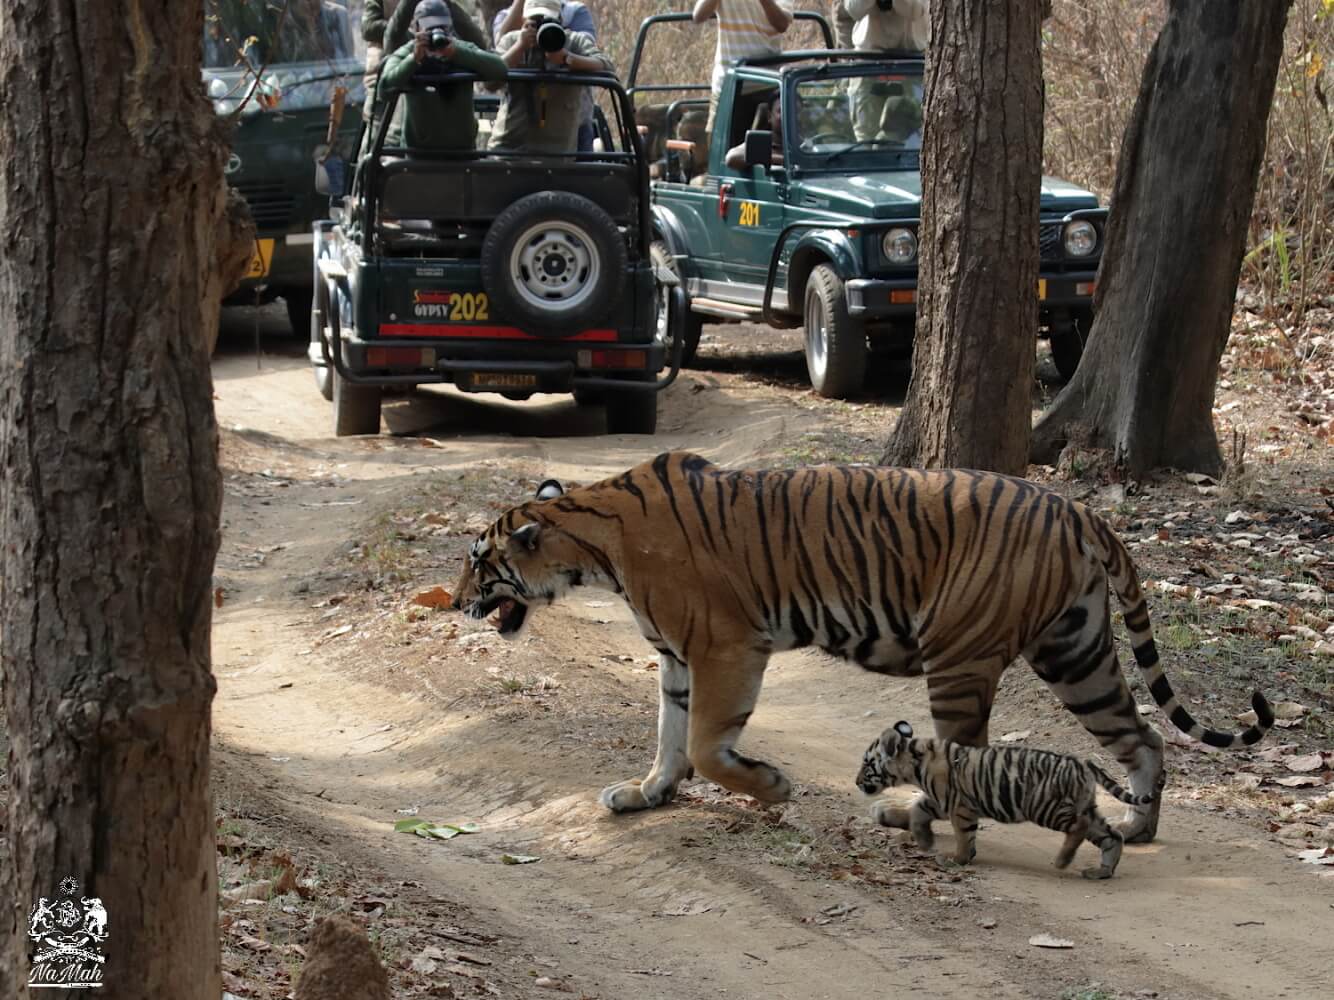 Tigeress Choti Mada walking on road with her cub in jungle of Kanha
